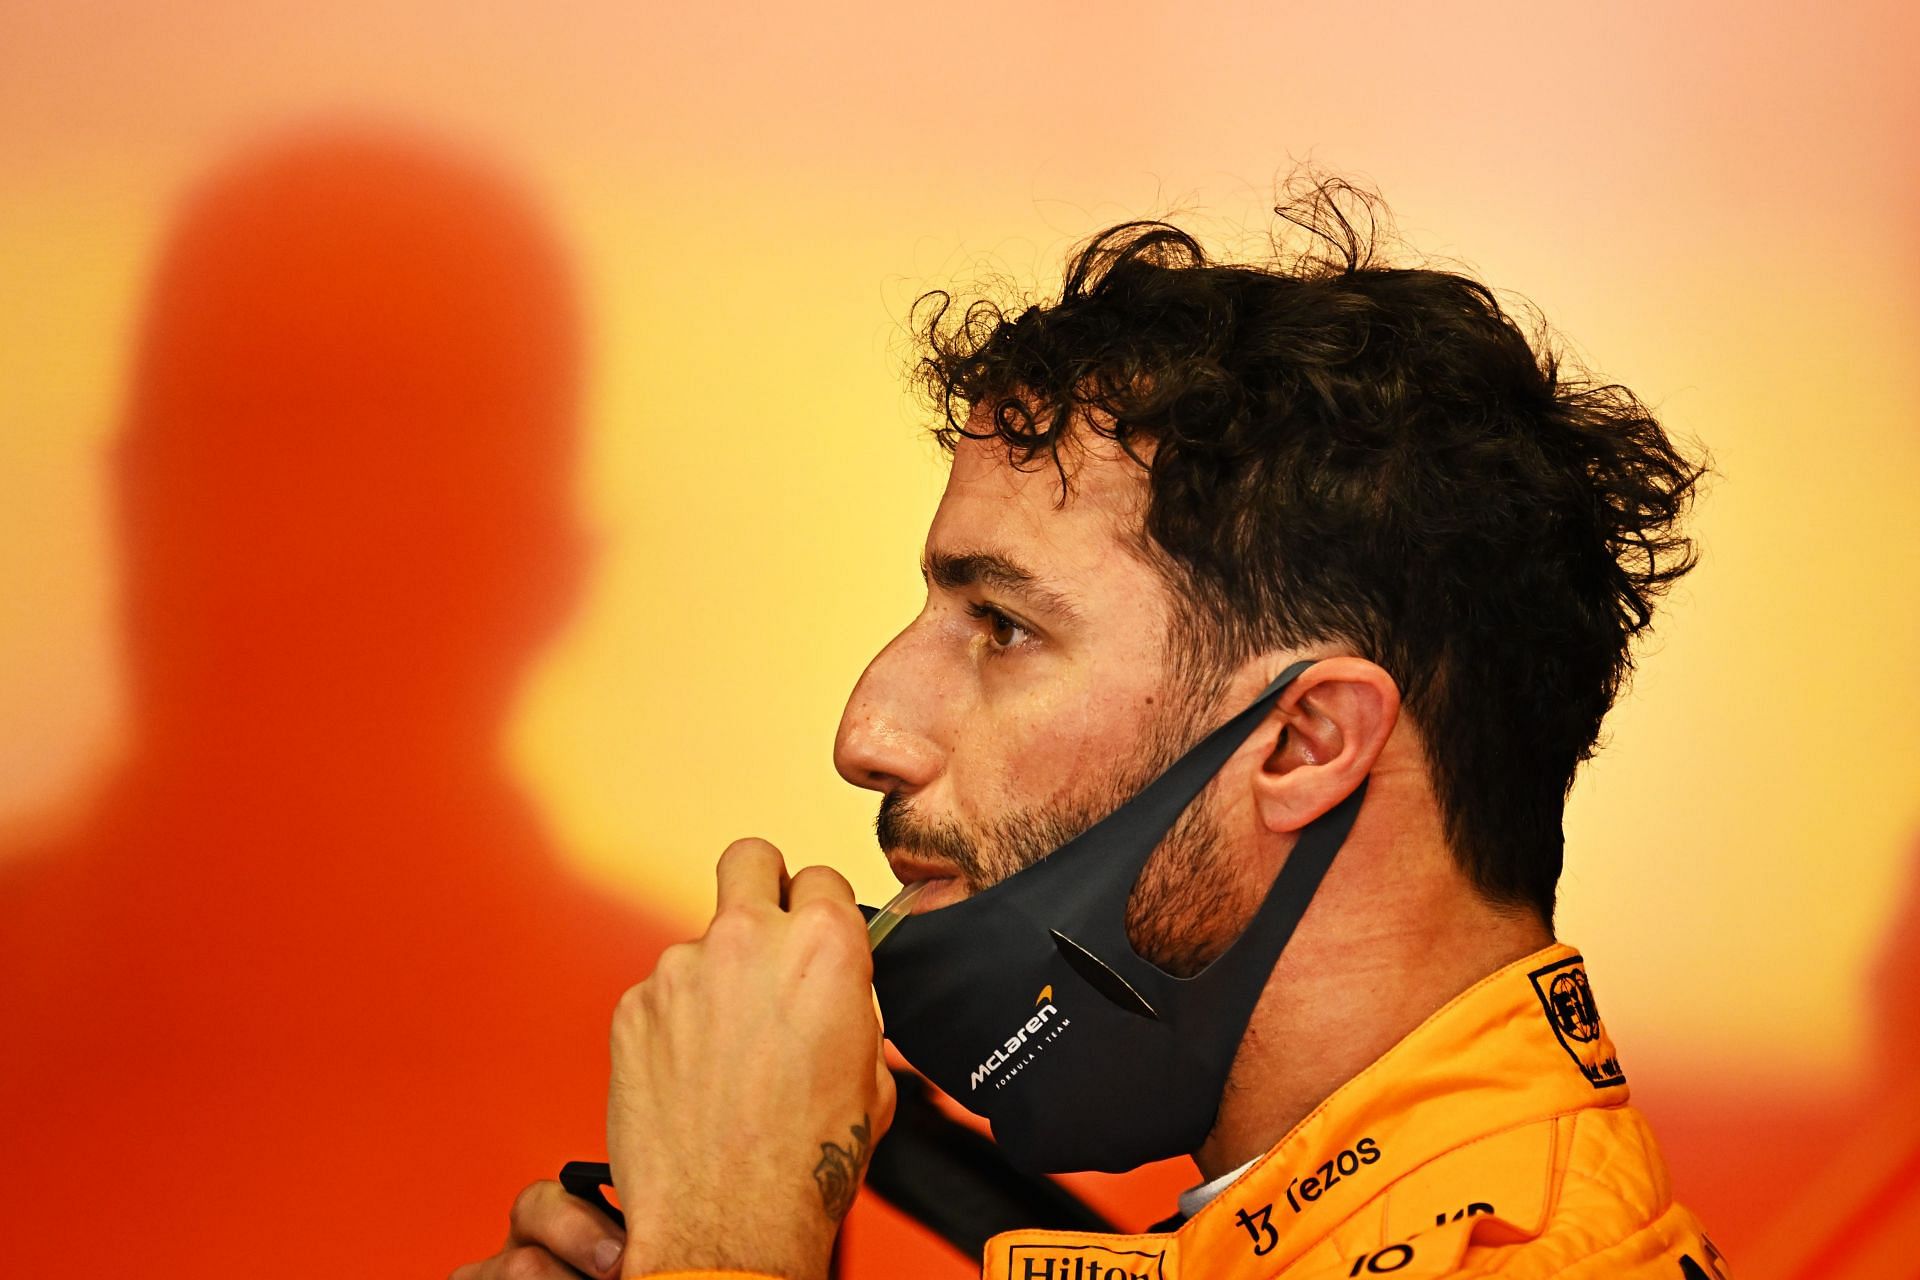 Daniel Ricciardo will start in P9 for the Spanish GP